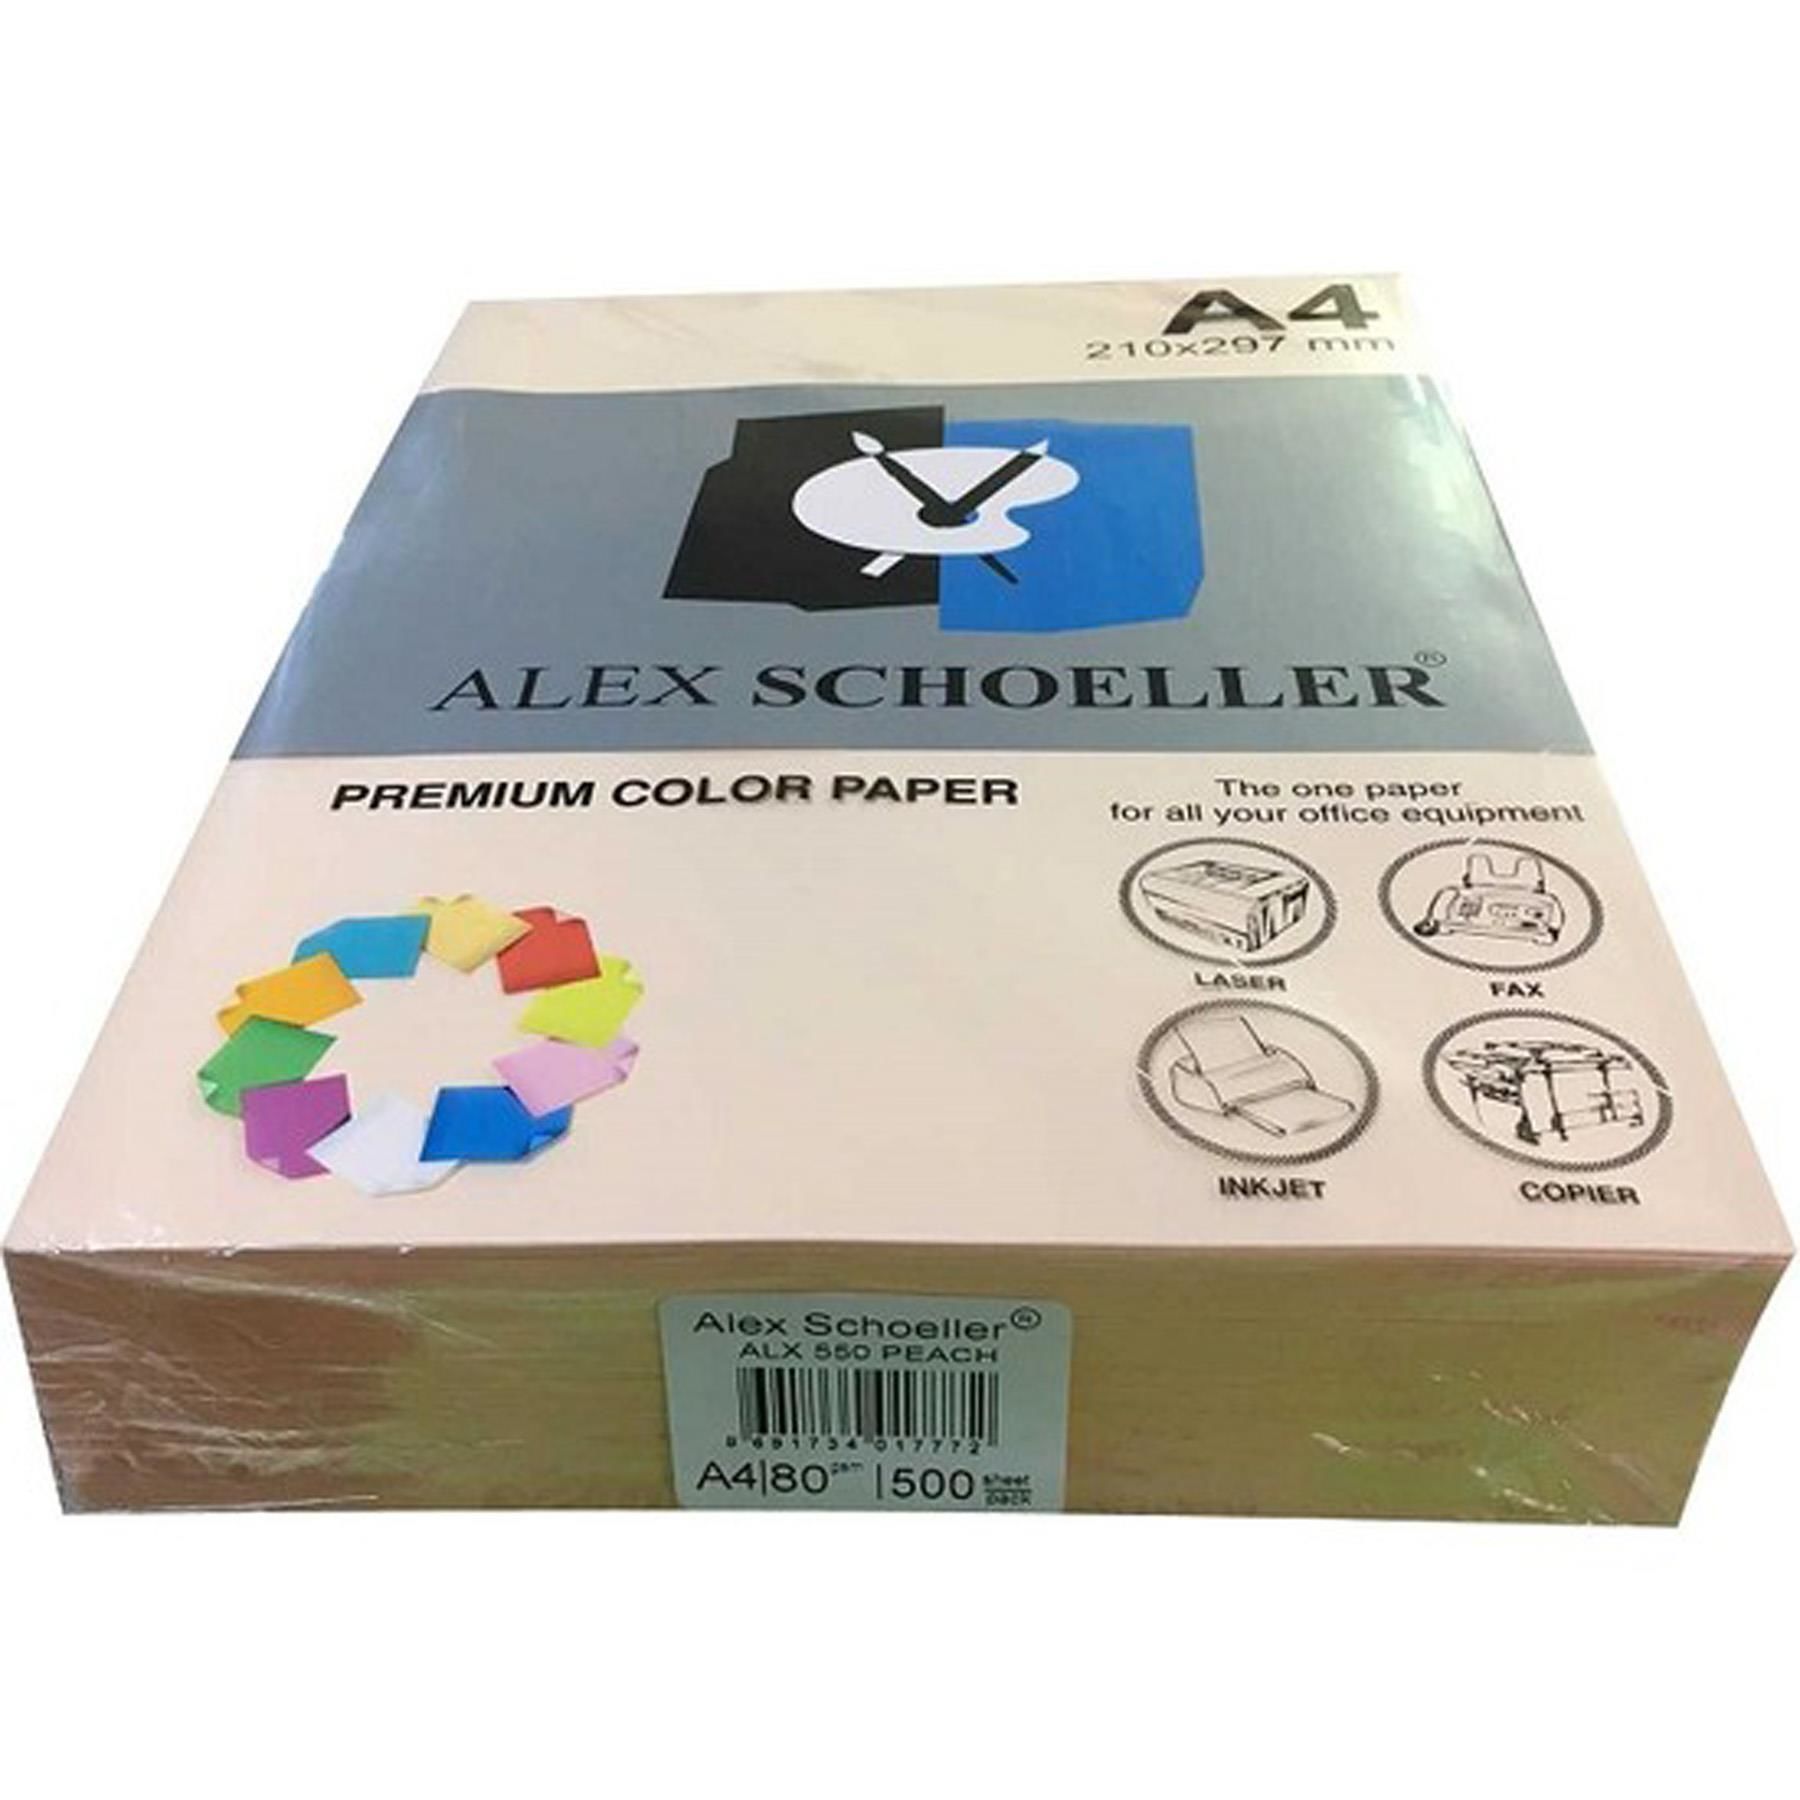 Alex A4 Renkli Fotokopi Kağıdı Somon 80gr 500lü 45150-550 (1 paket)